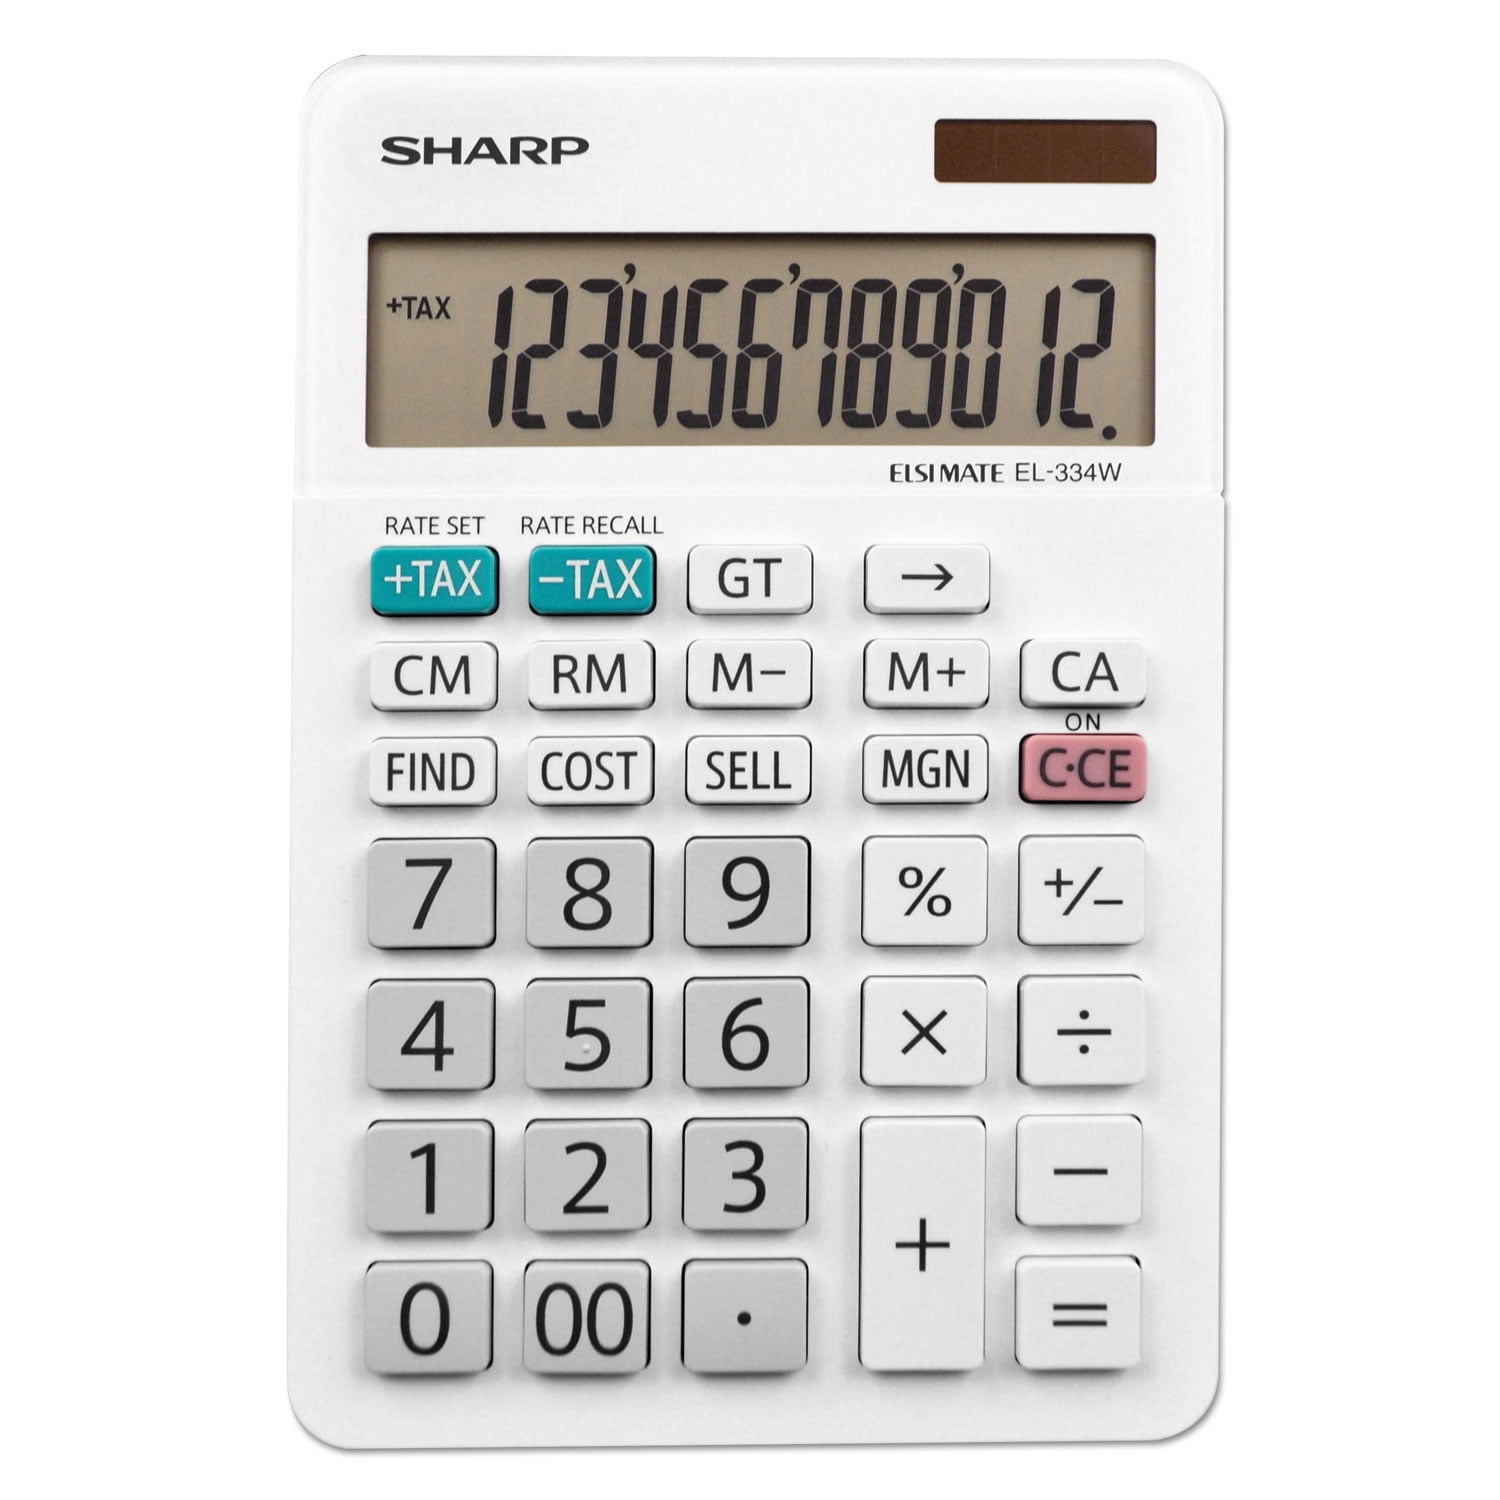 Casio DM-1200BM Business Calculator